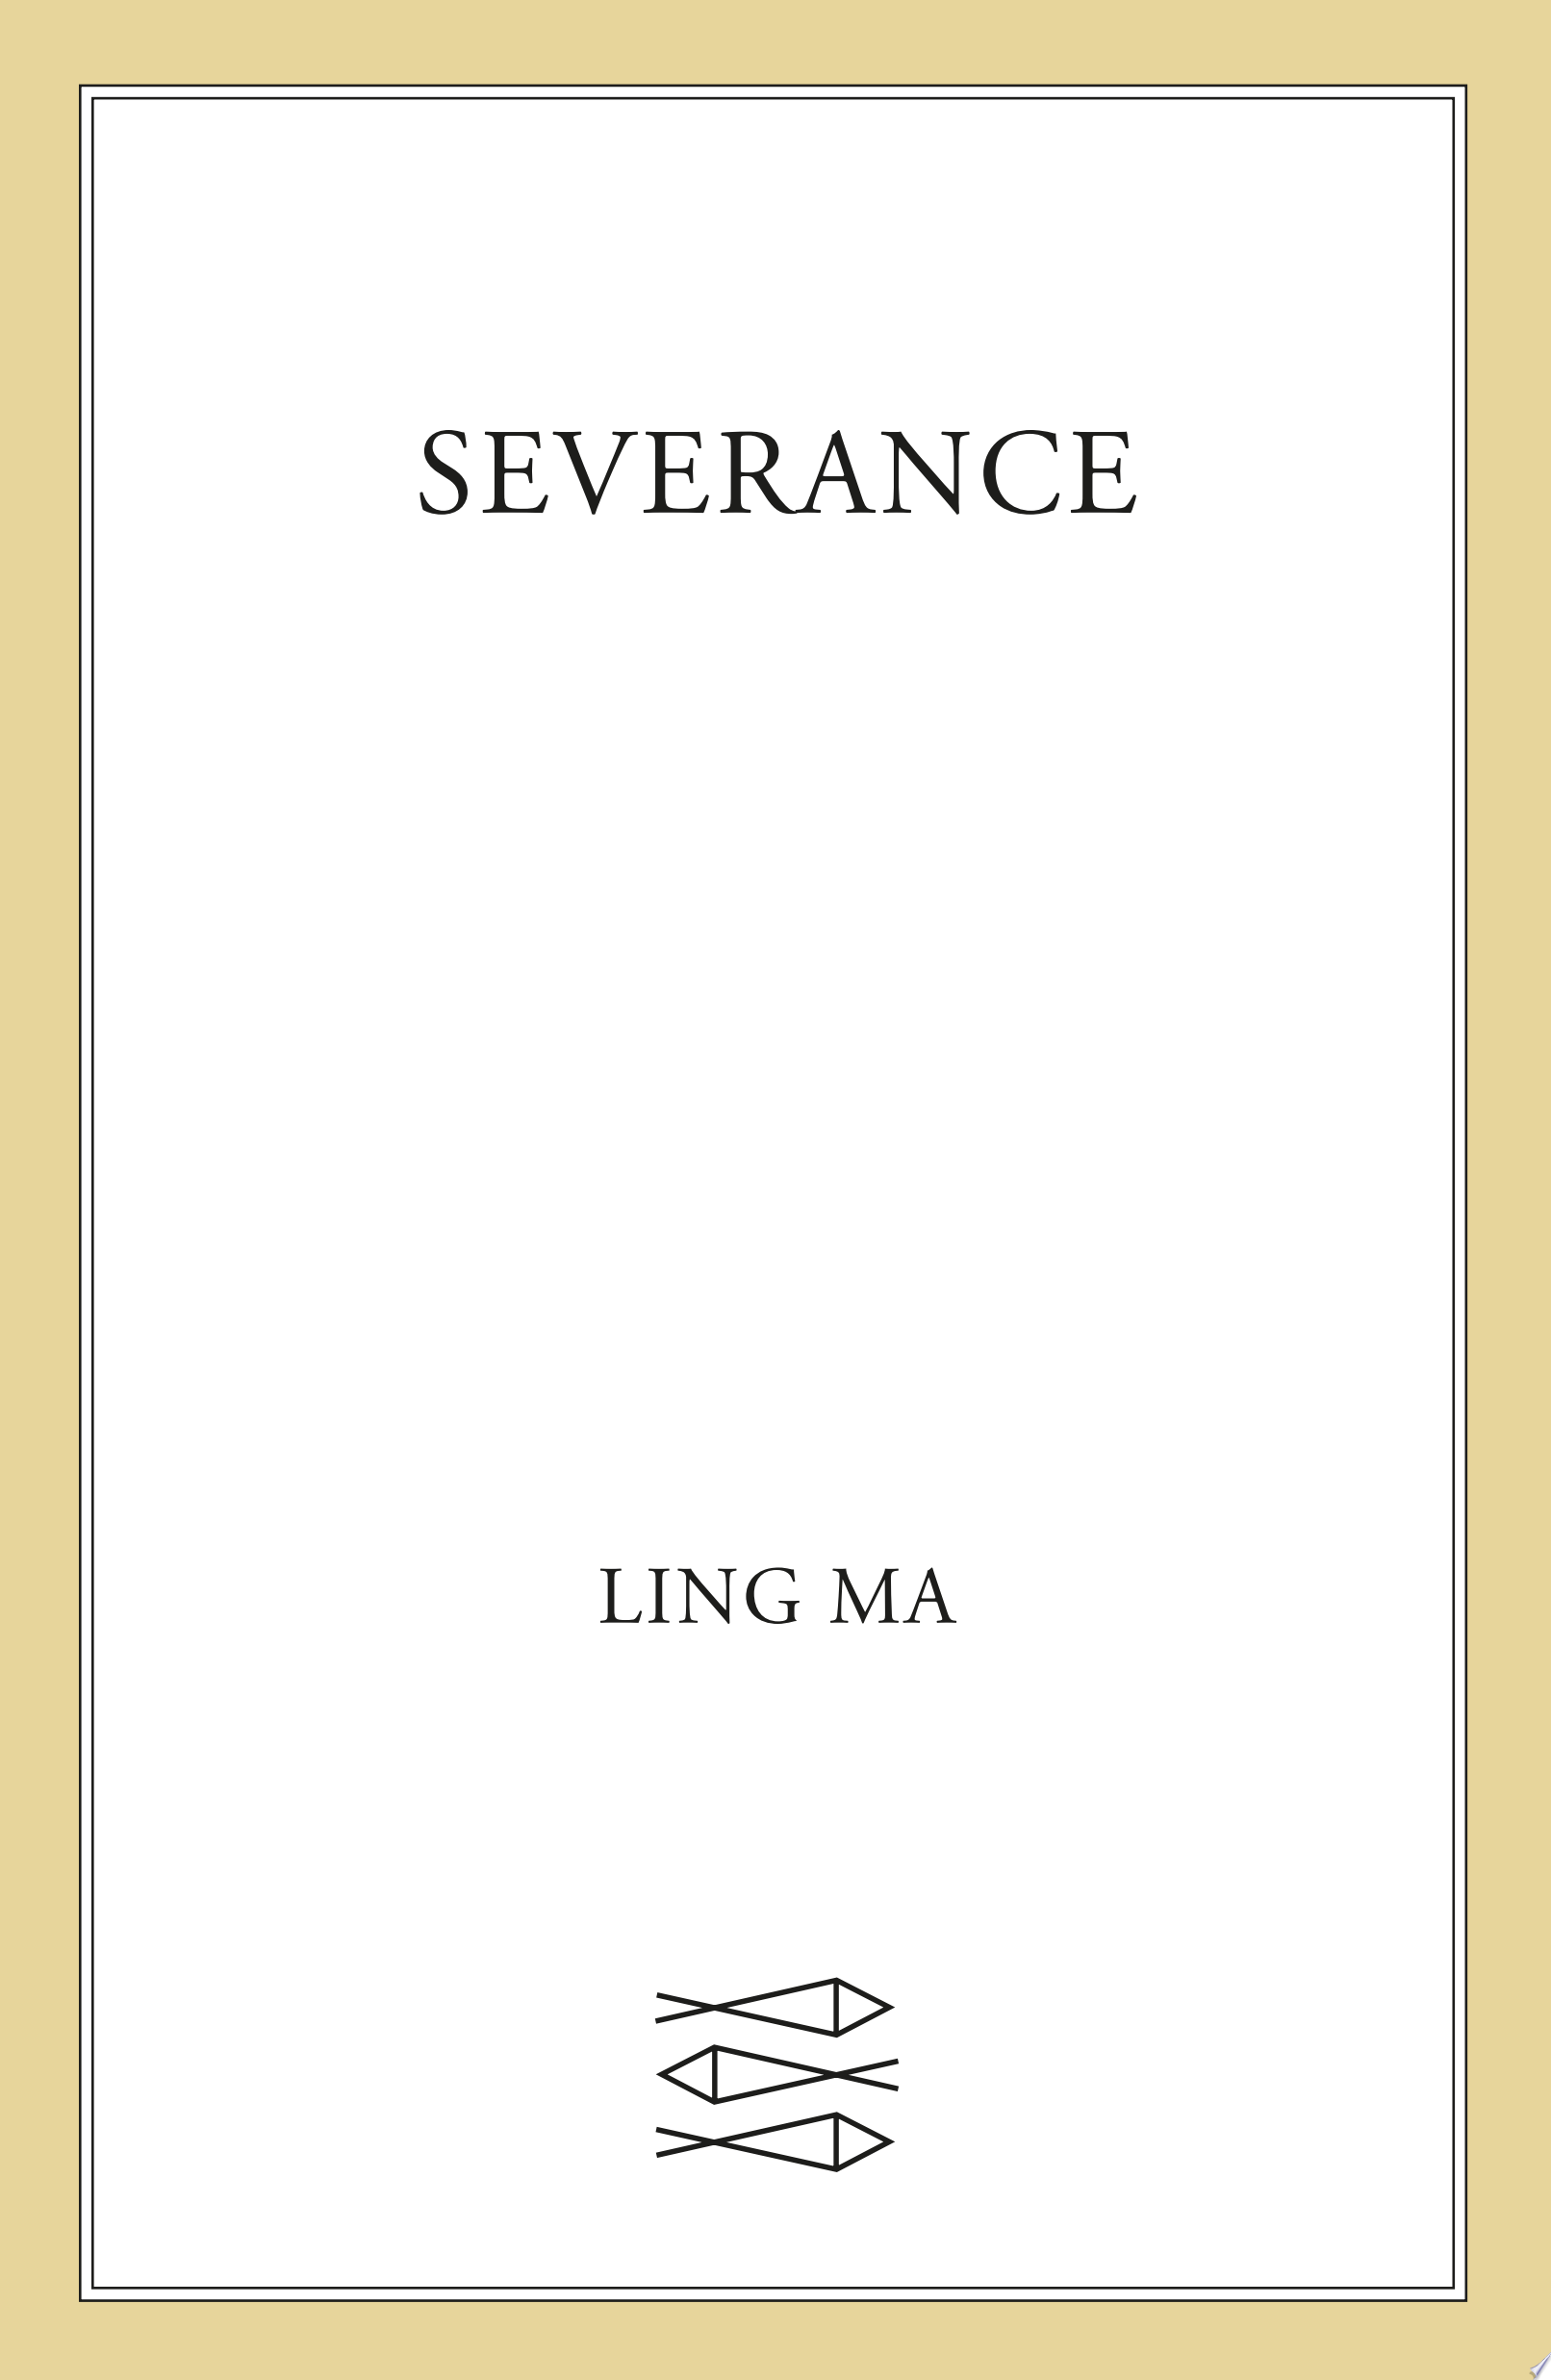 Image for "Severance"